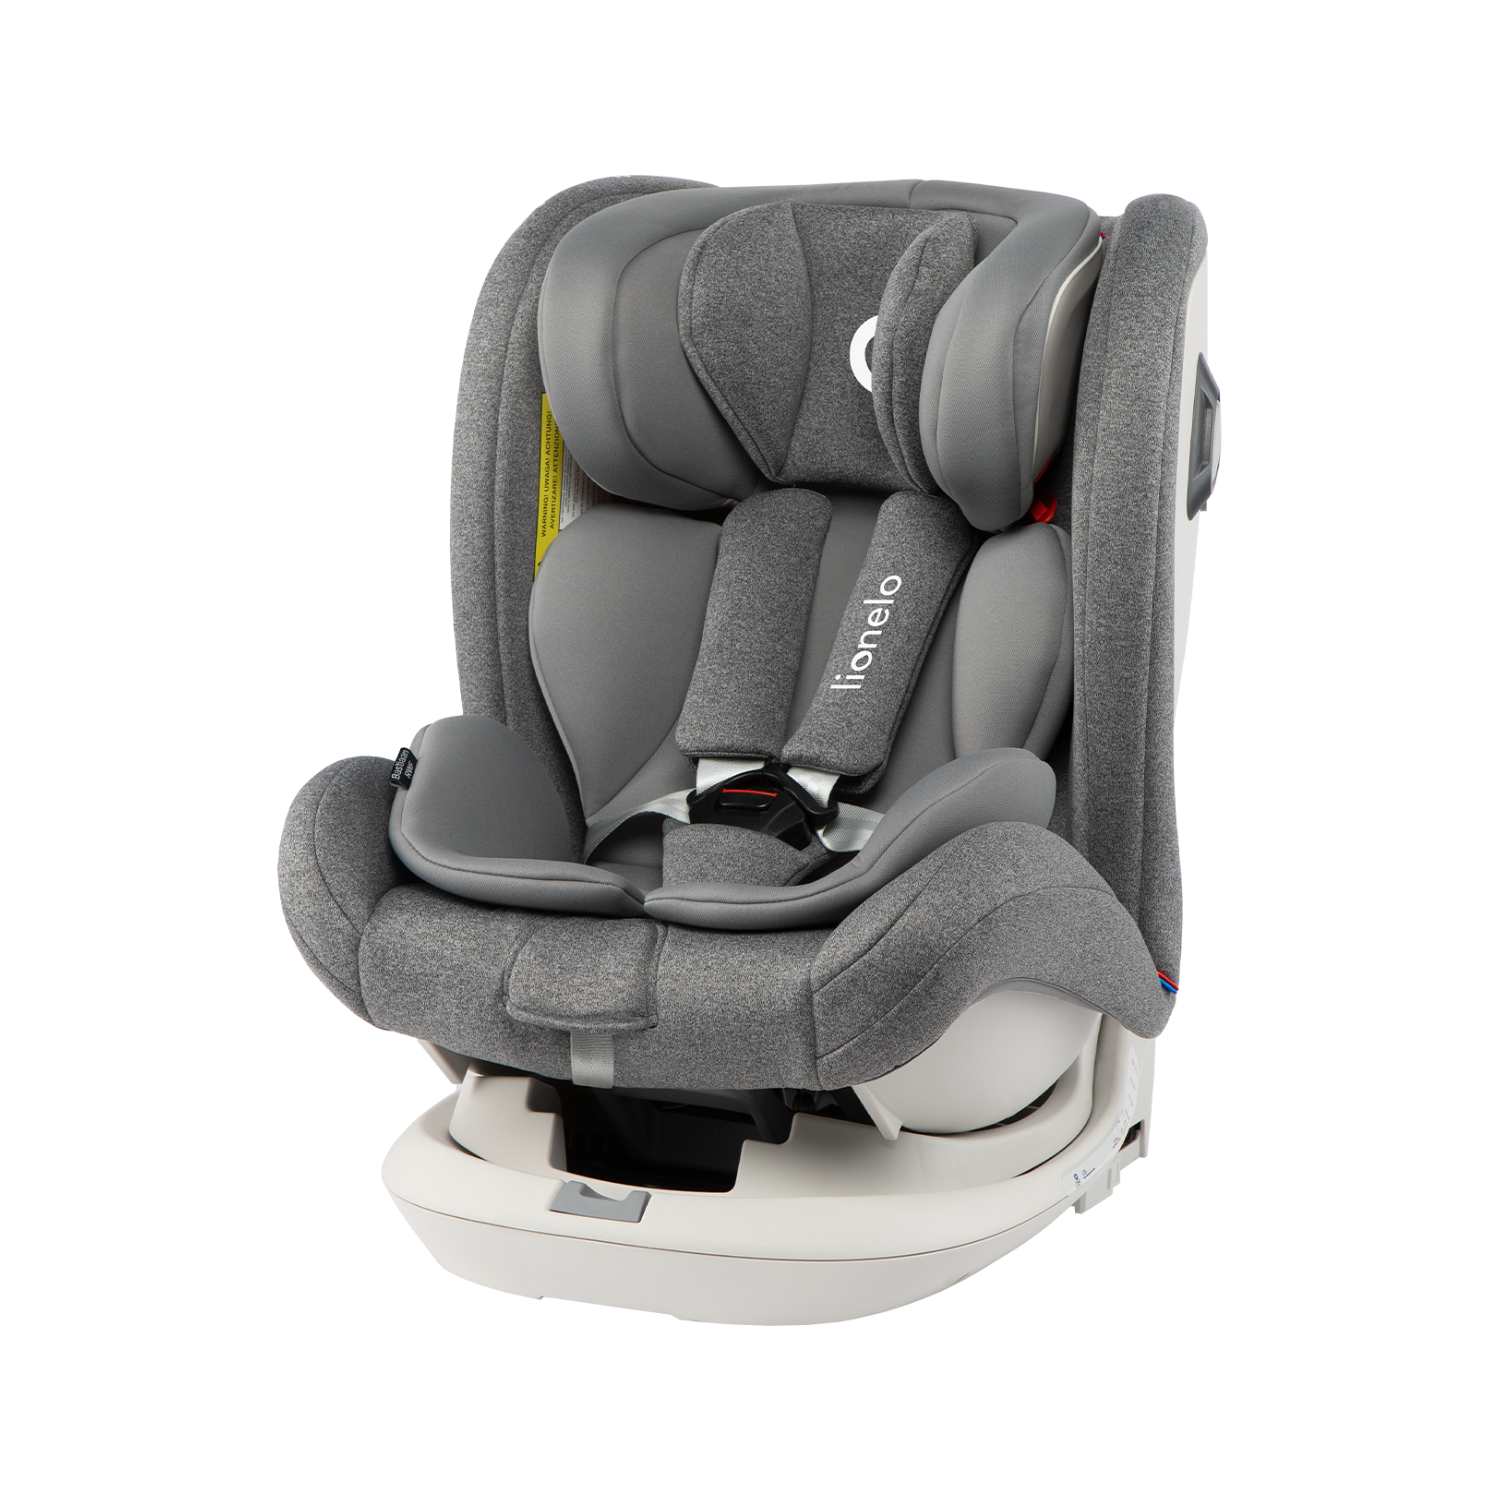 Lionelo Bastiaan RWF Stone — Child safety seat 0-36 kg